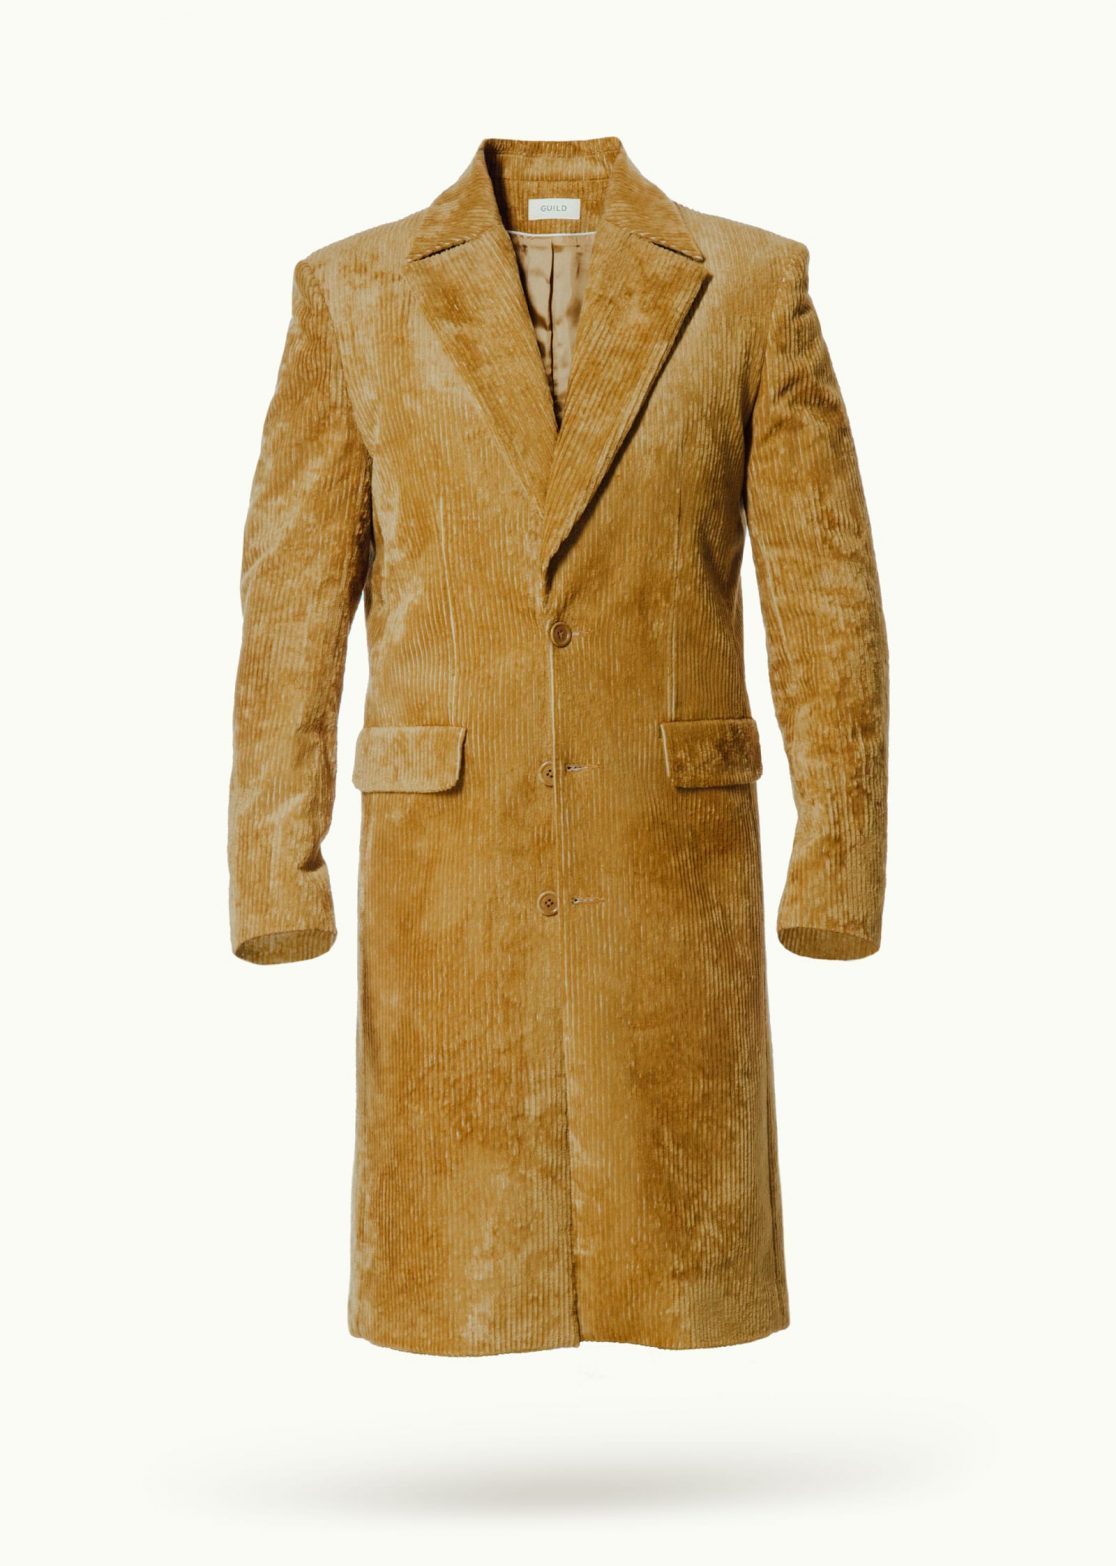 Men - Suit Jackets - Outerwear - Zunft Zoot Jacket Golden Courduroy Image Primary